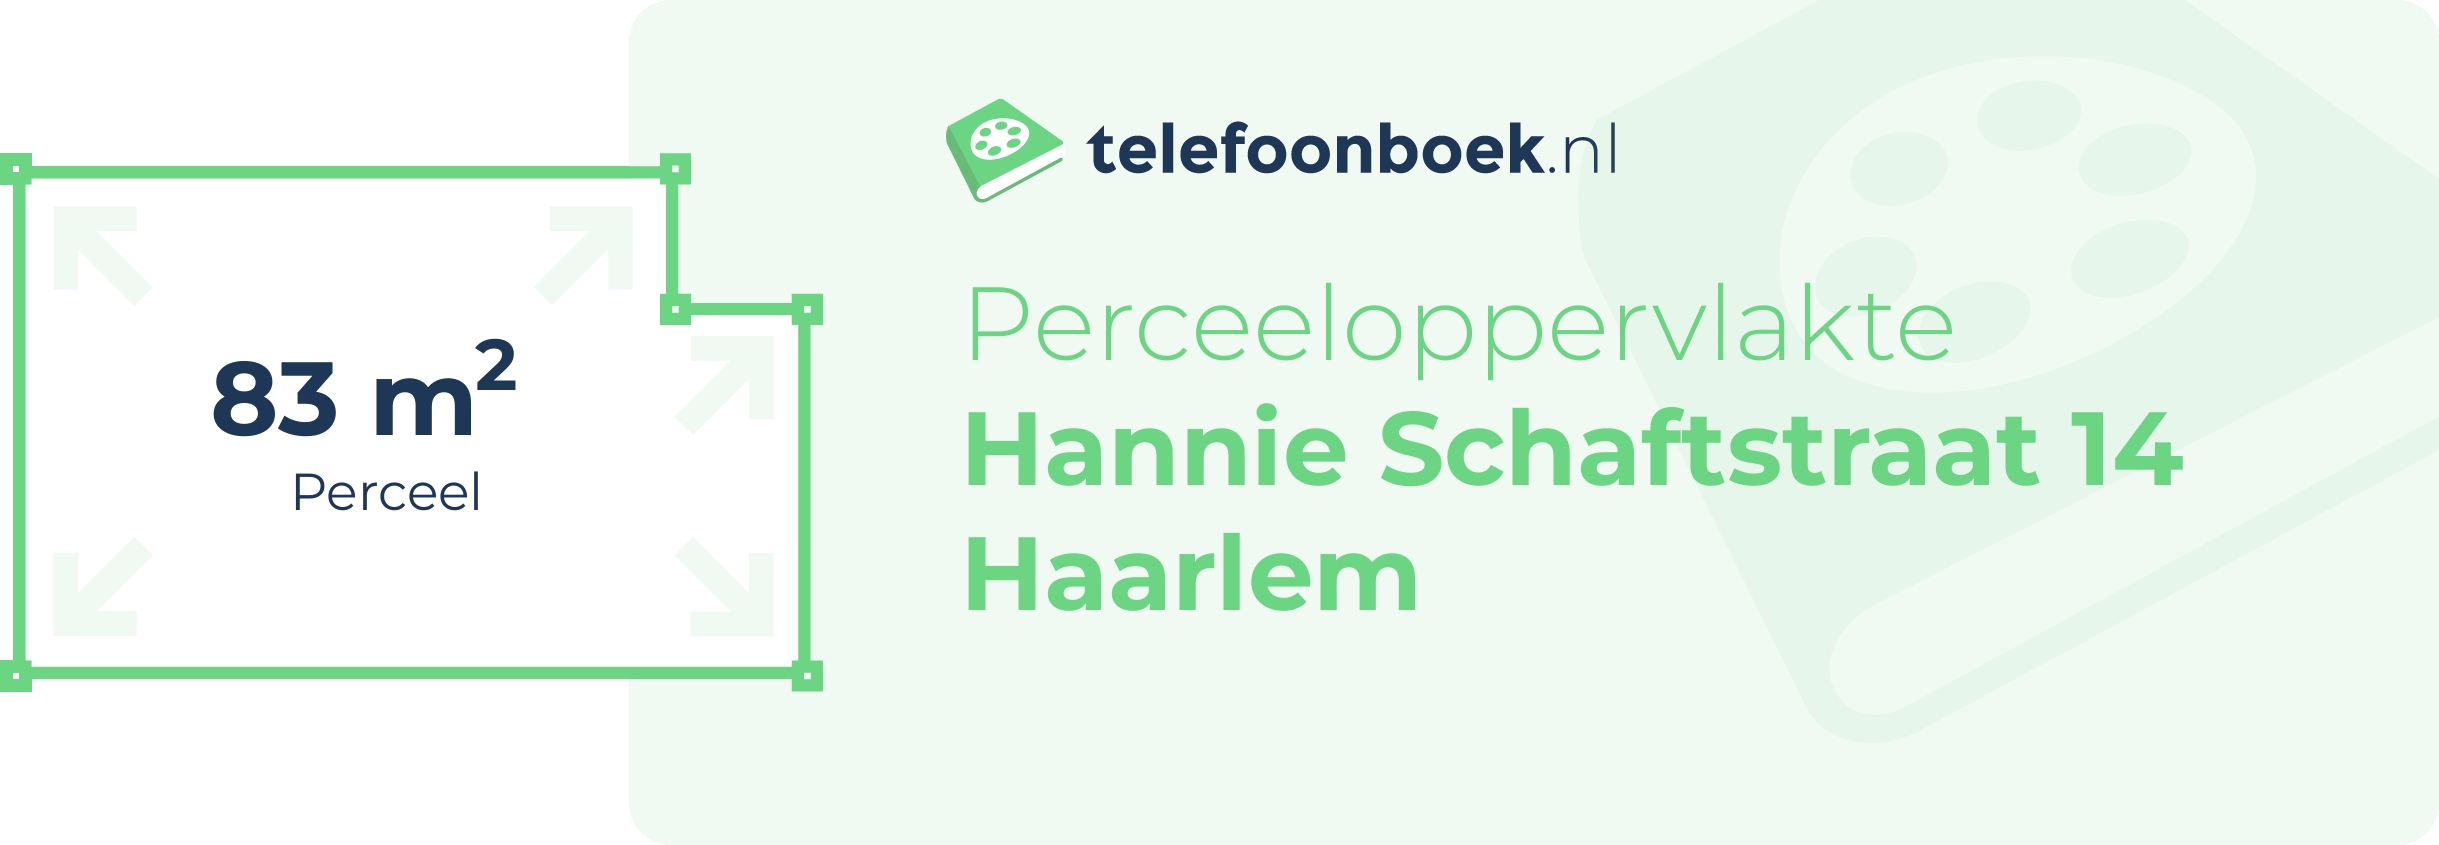 Perceeloppervlakte Hannie Schaftstraat 14 Haarlem